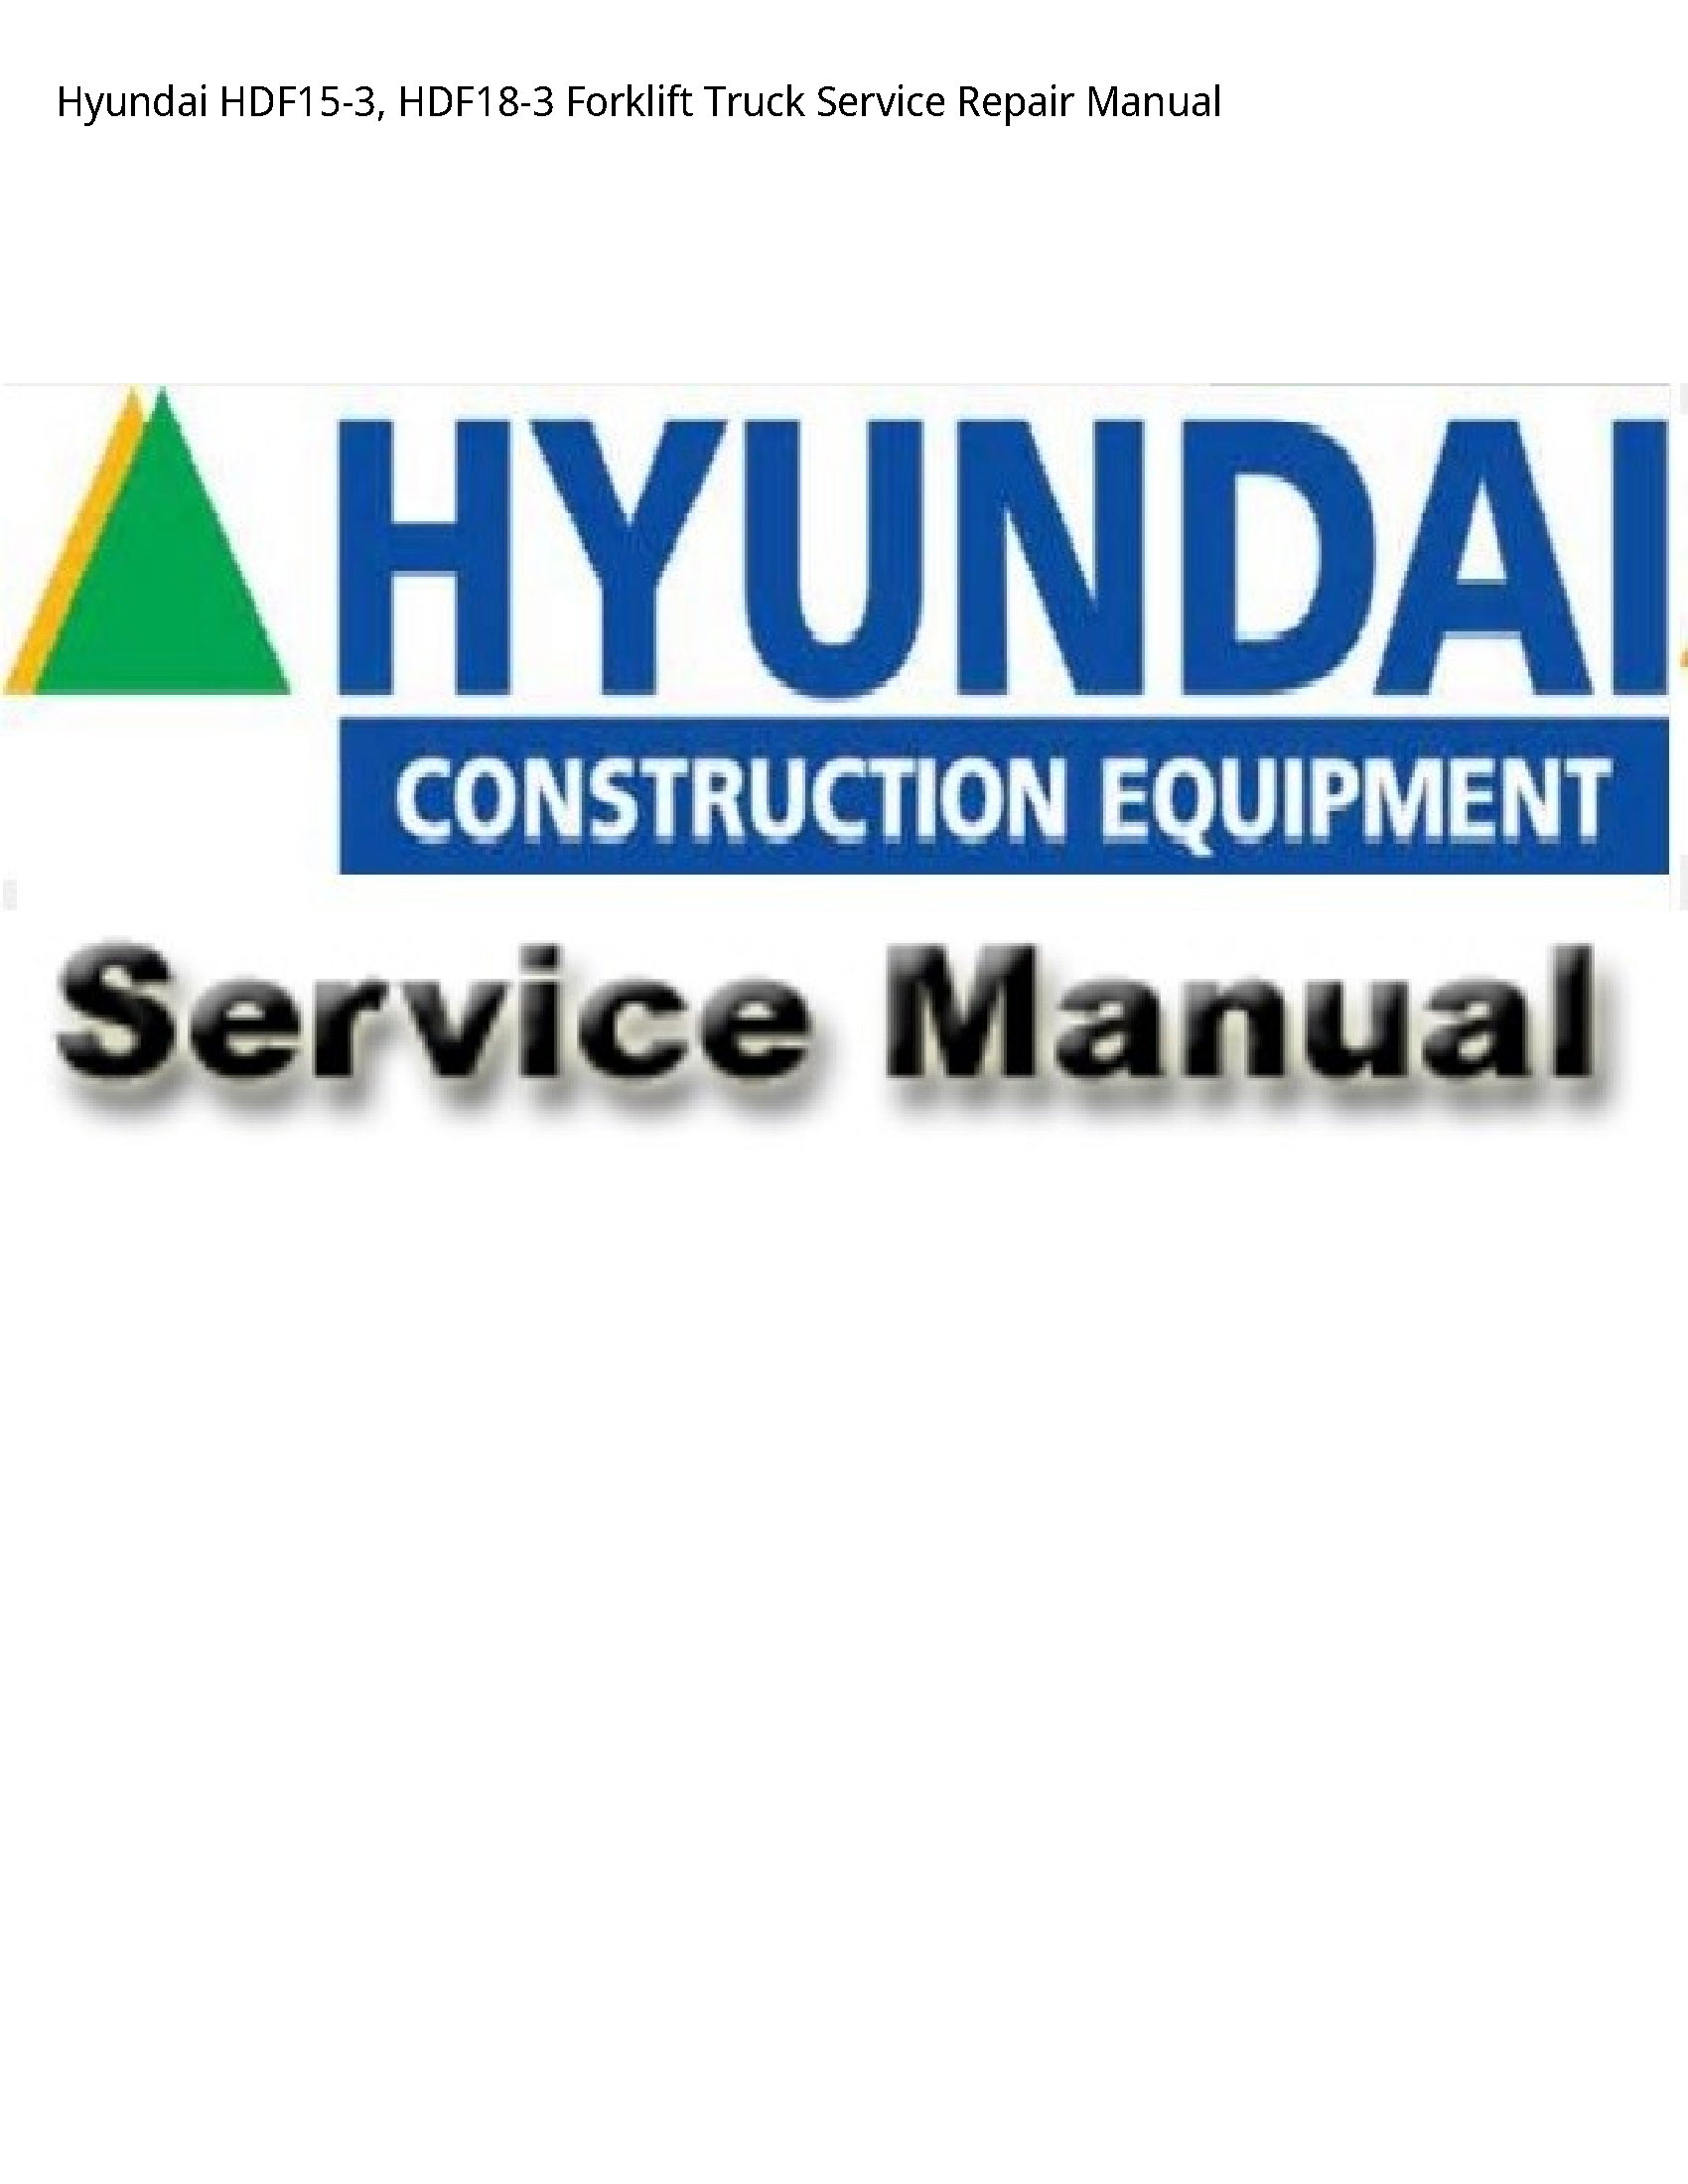 Hyundai HDF15-3 Forklift Truck manual